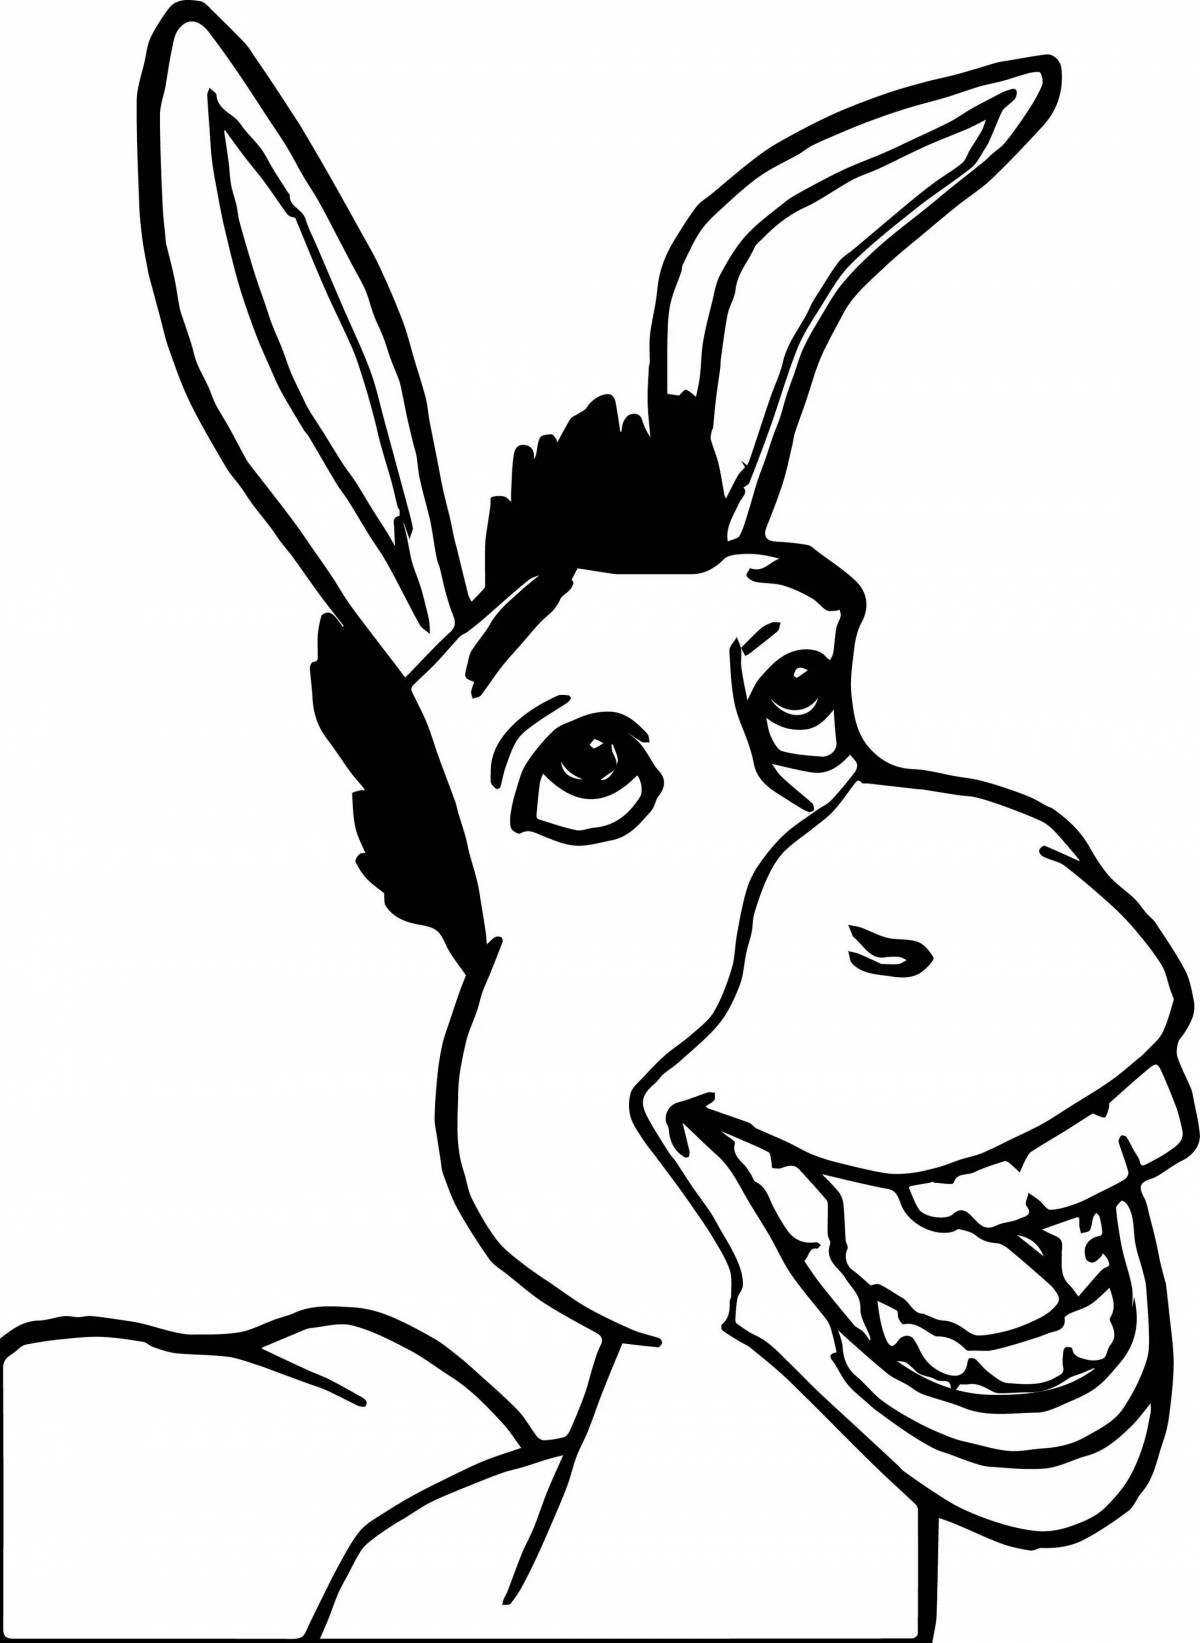 Fun coloring donkey from shrek